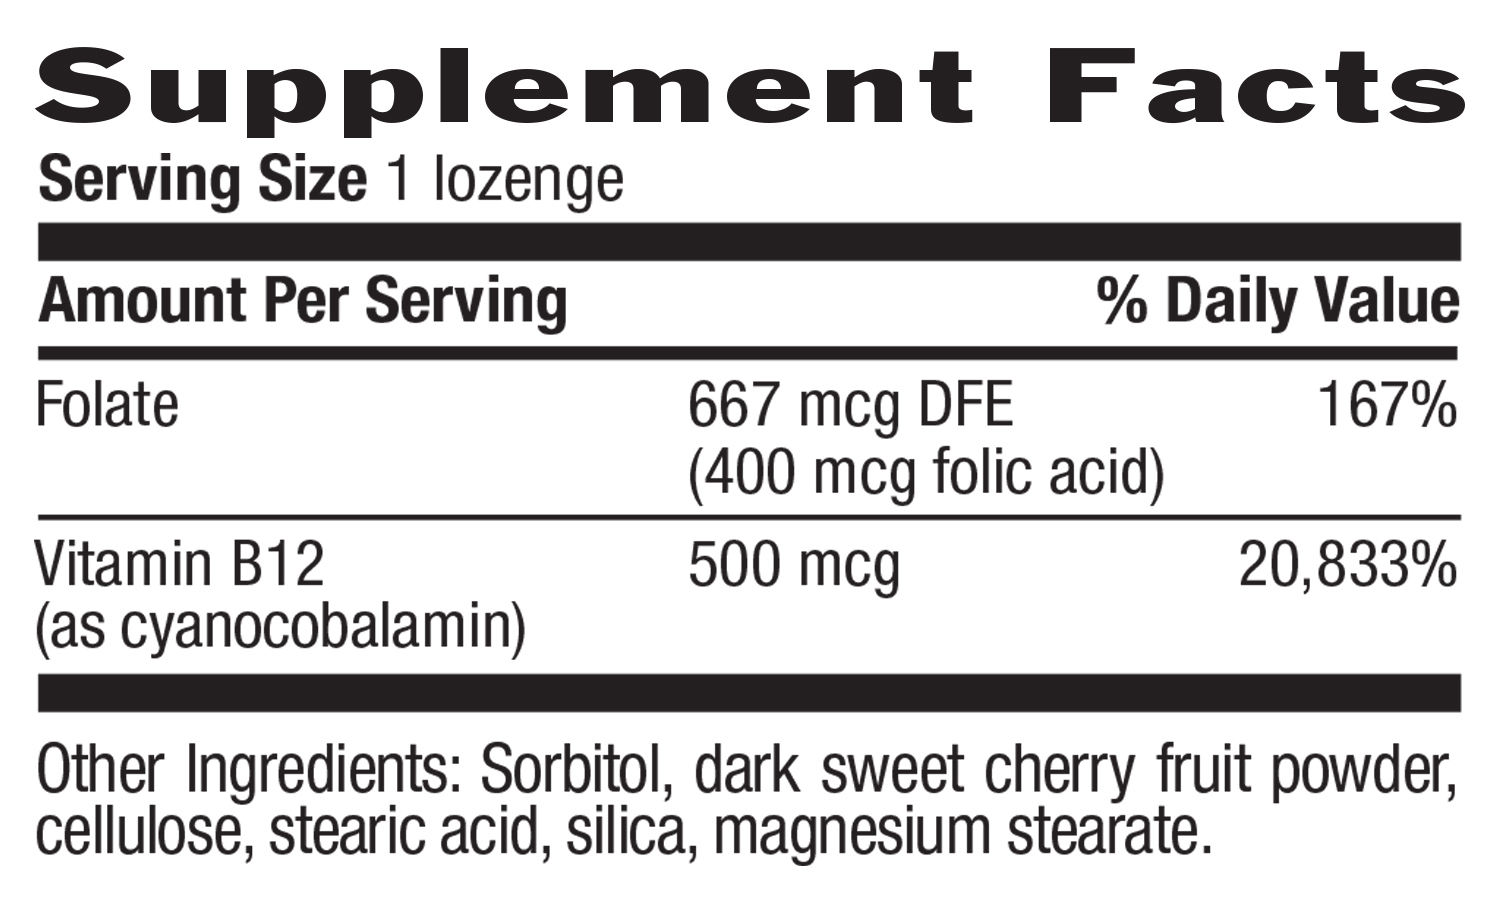 Vitamin B12 500 mcg, Cherry Lozenges